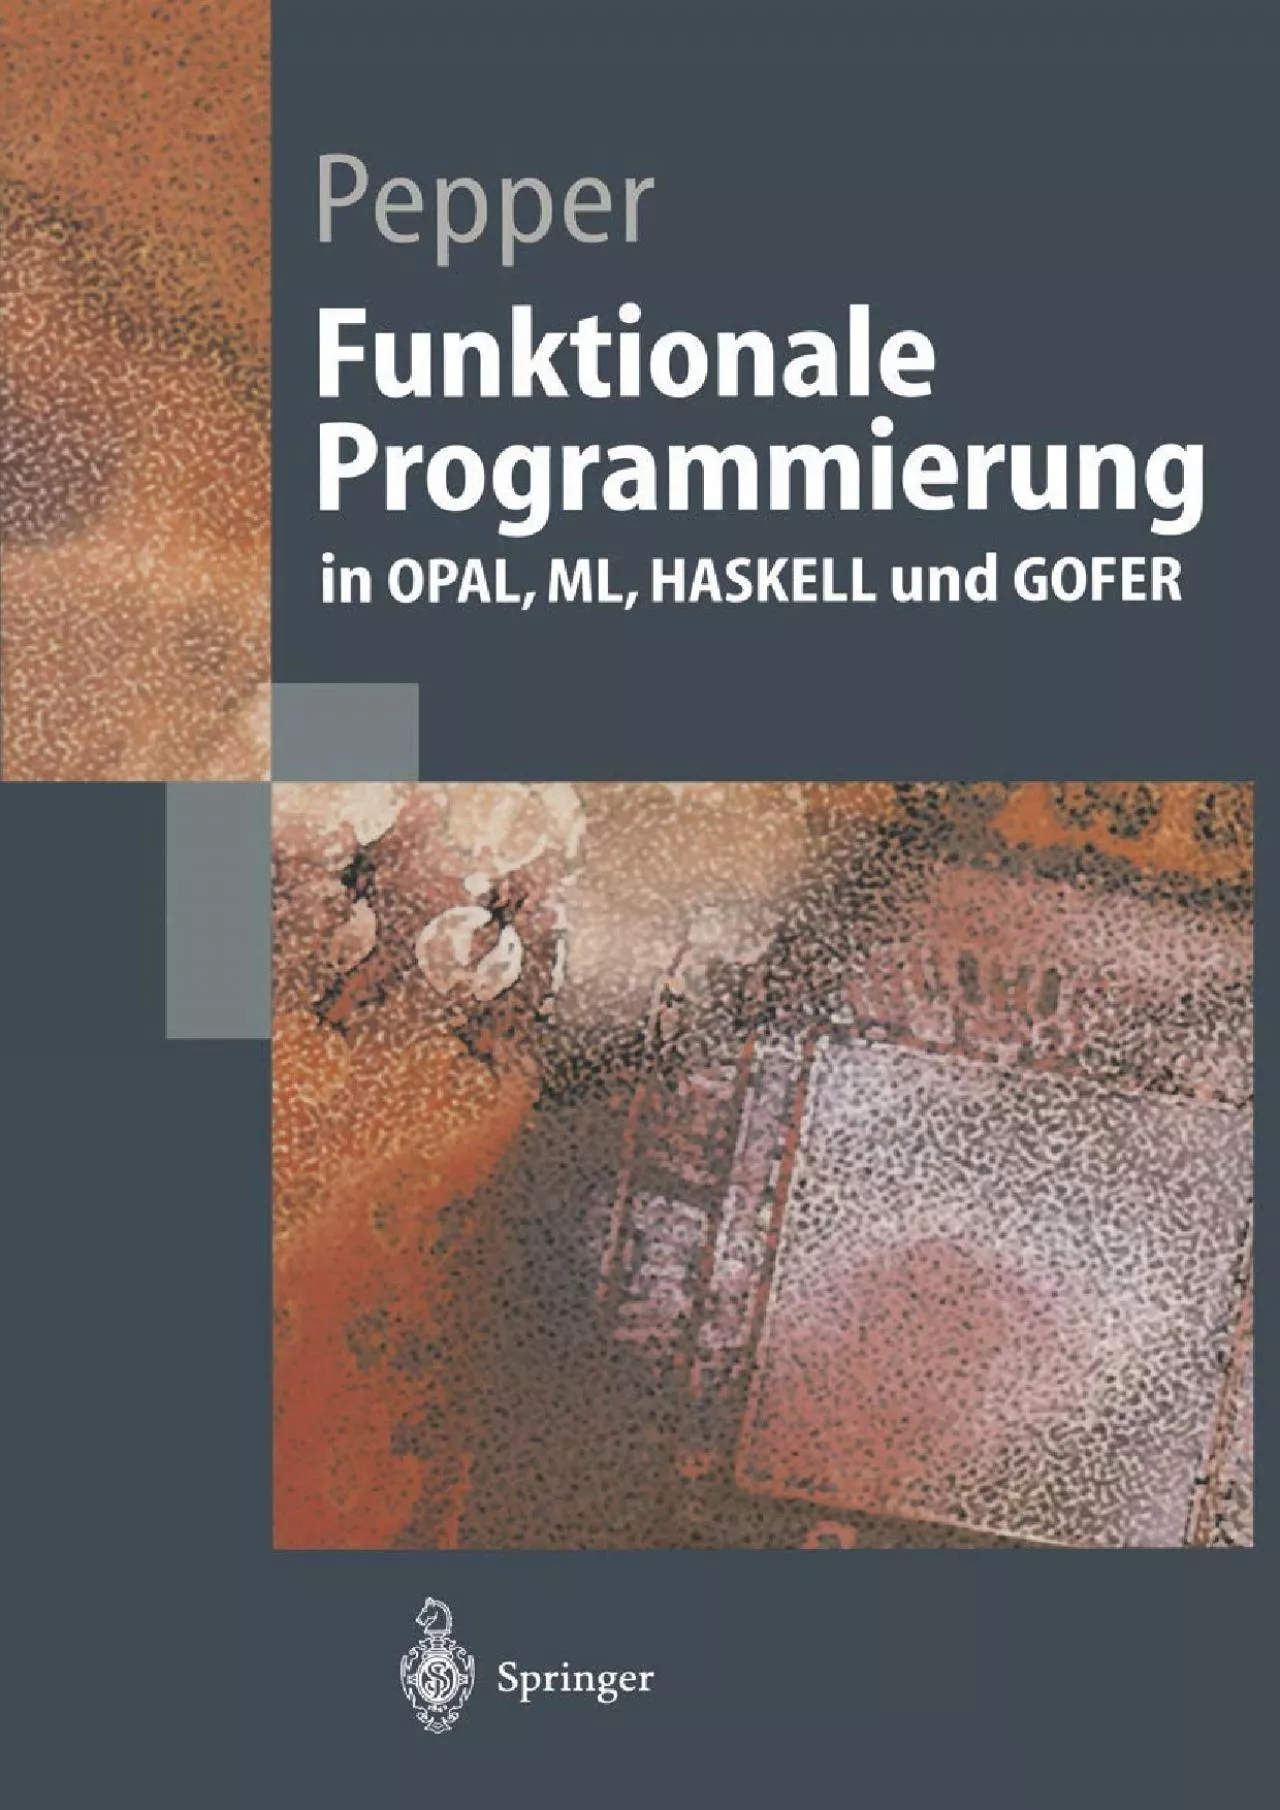 [READING BOOK]-Funktionale Programmierung: in OPAL, ML, HASKELL und GOFER (Springer-Lehrbuch)